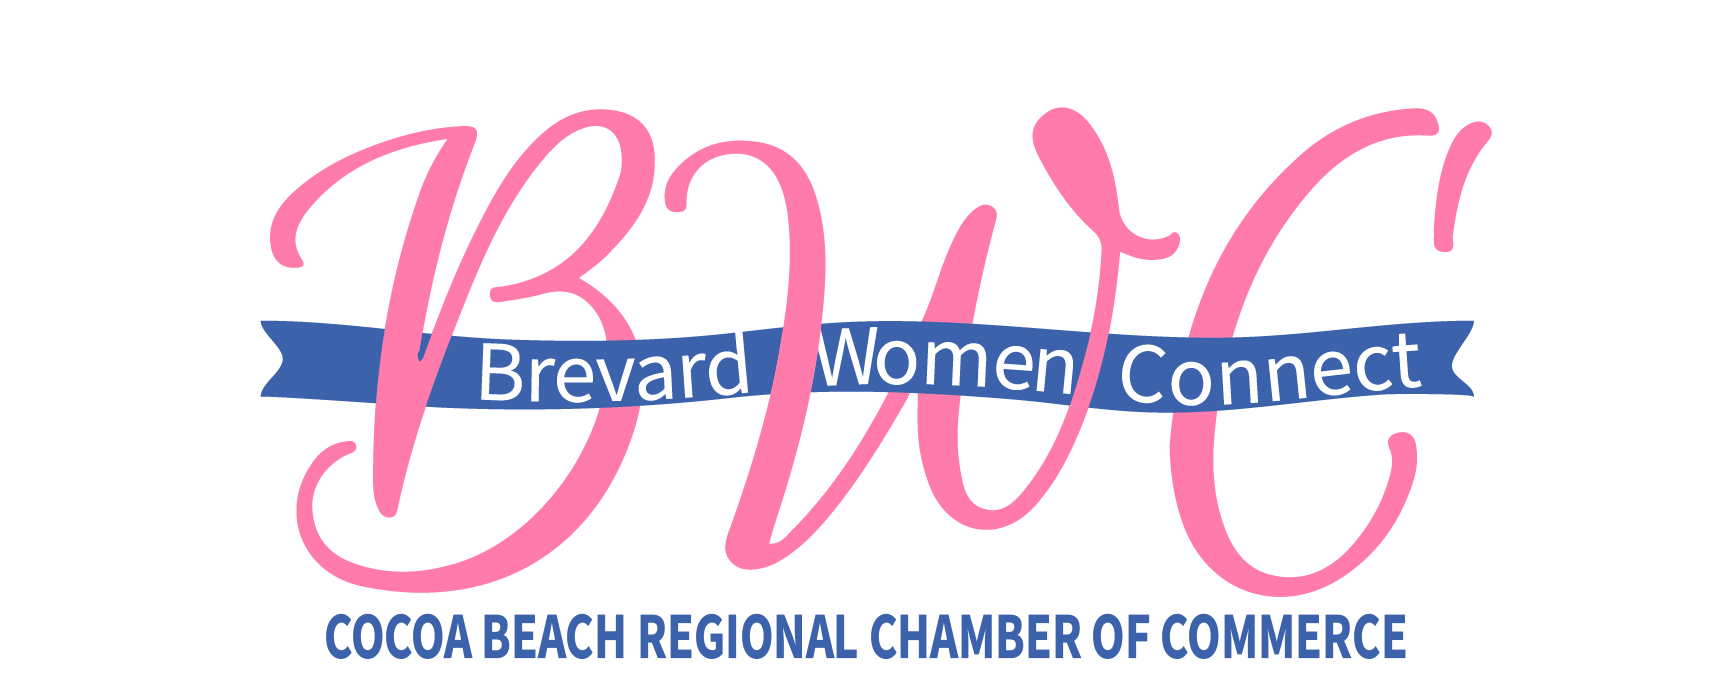 BWC brevard women connect